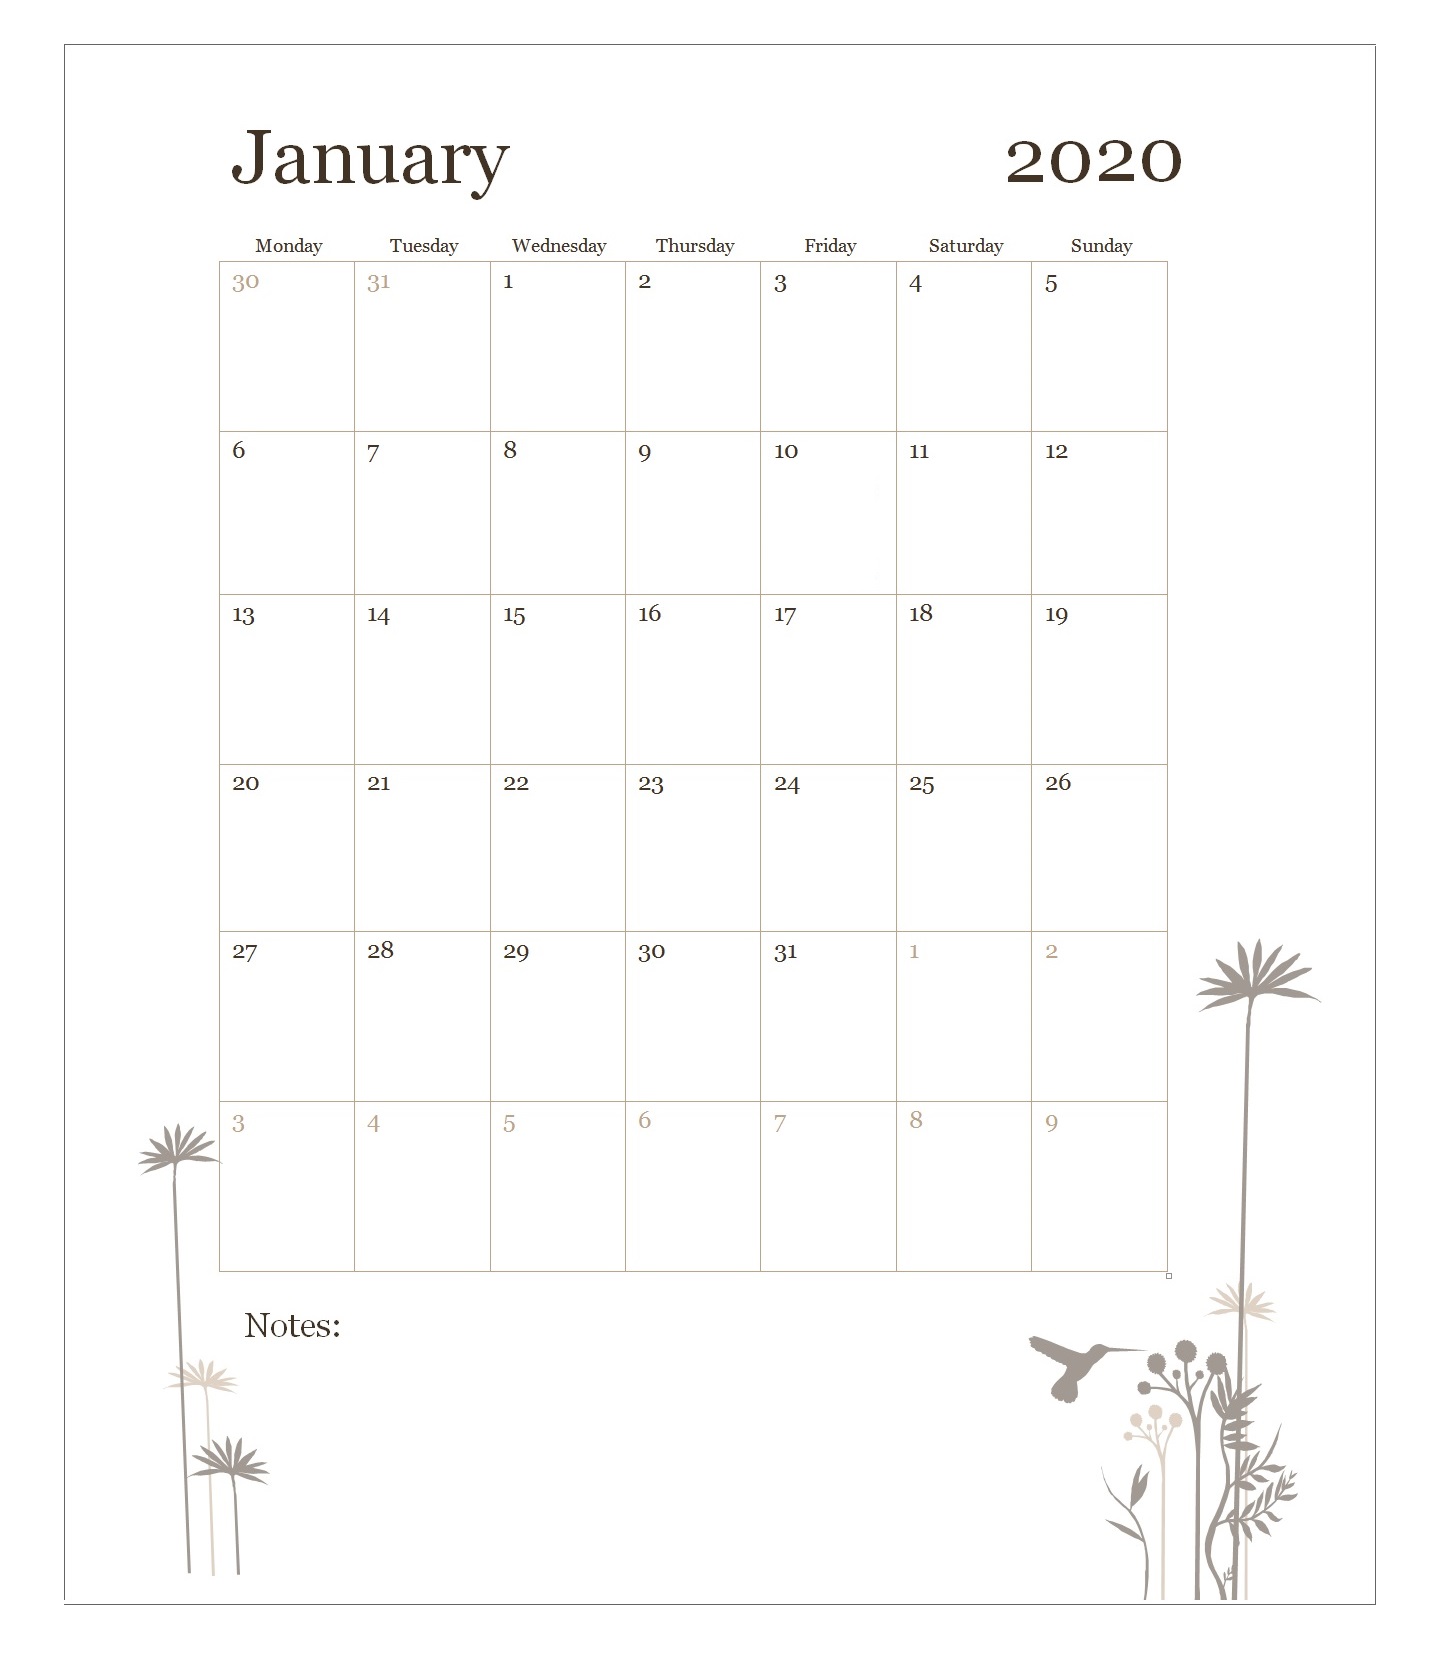 January 2020 Wall Calendar